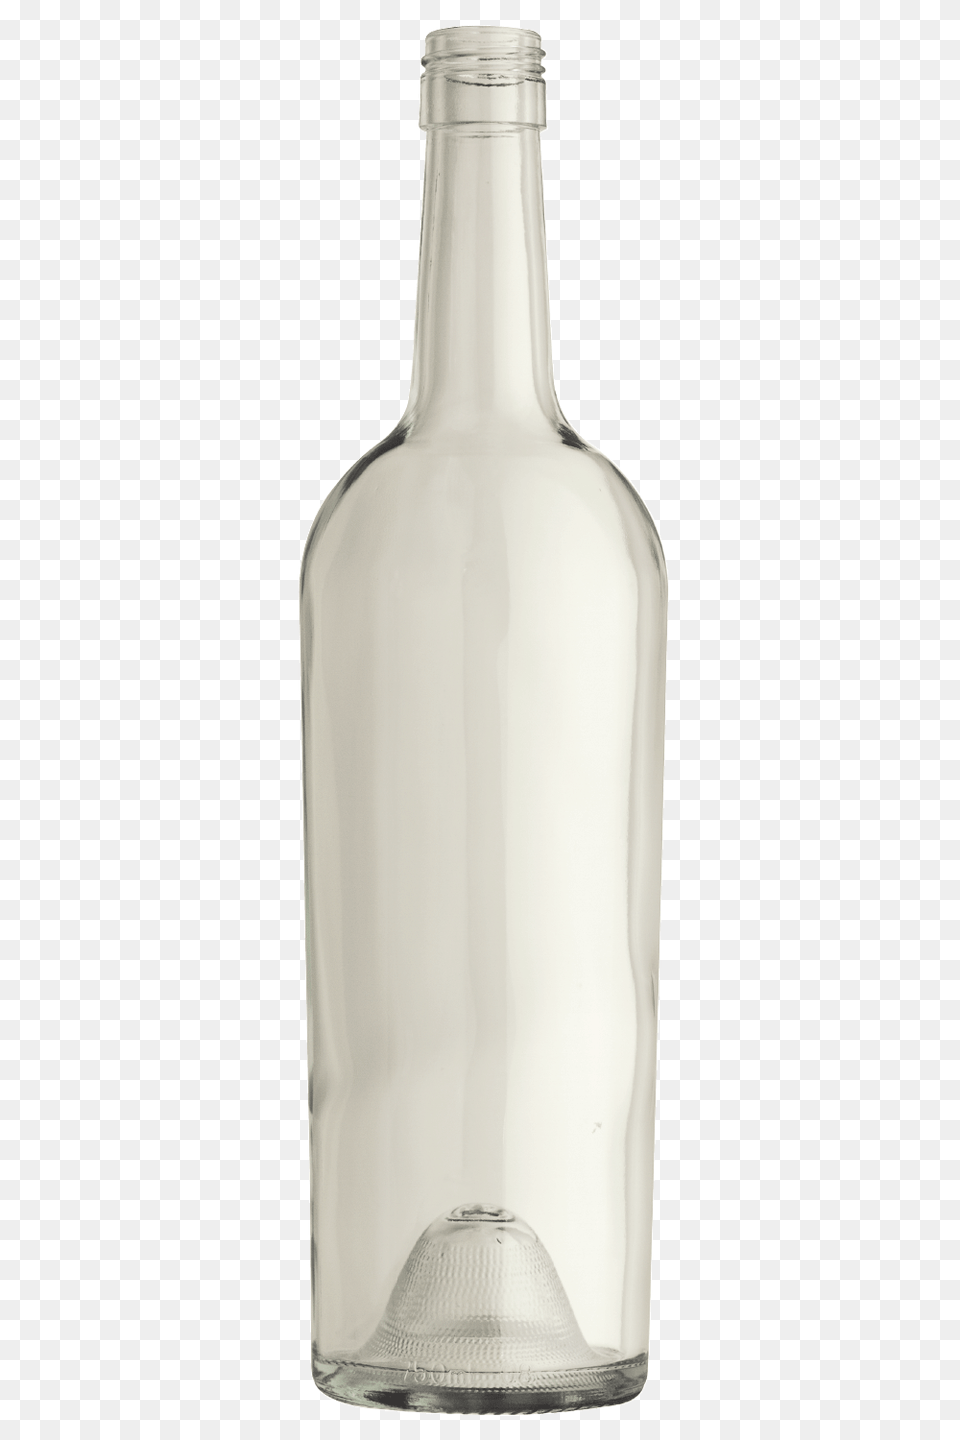 Bottles Aac Wine, Bottle, Glass, Jar, Alcohol Free Transparent Png